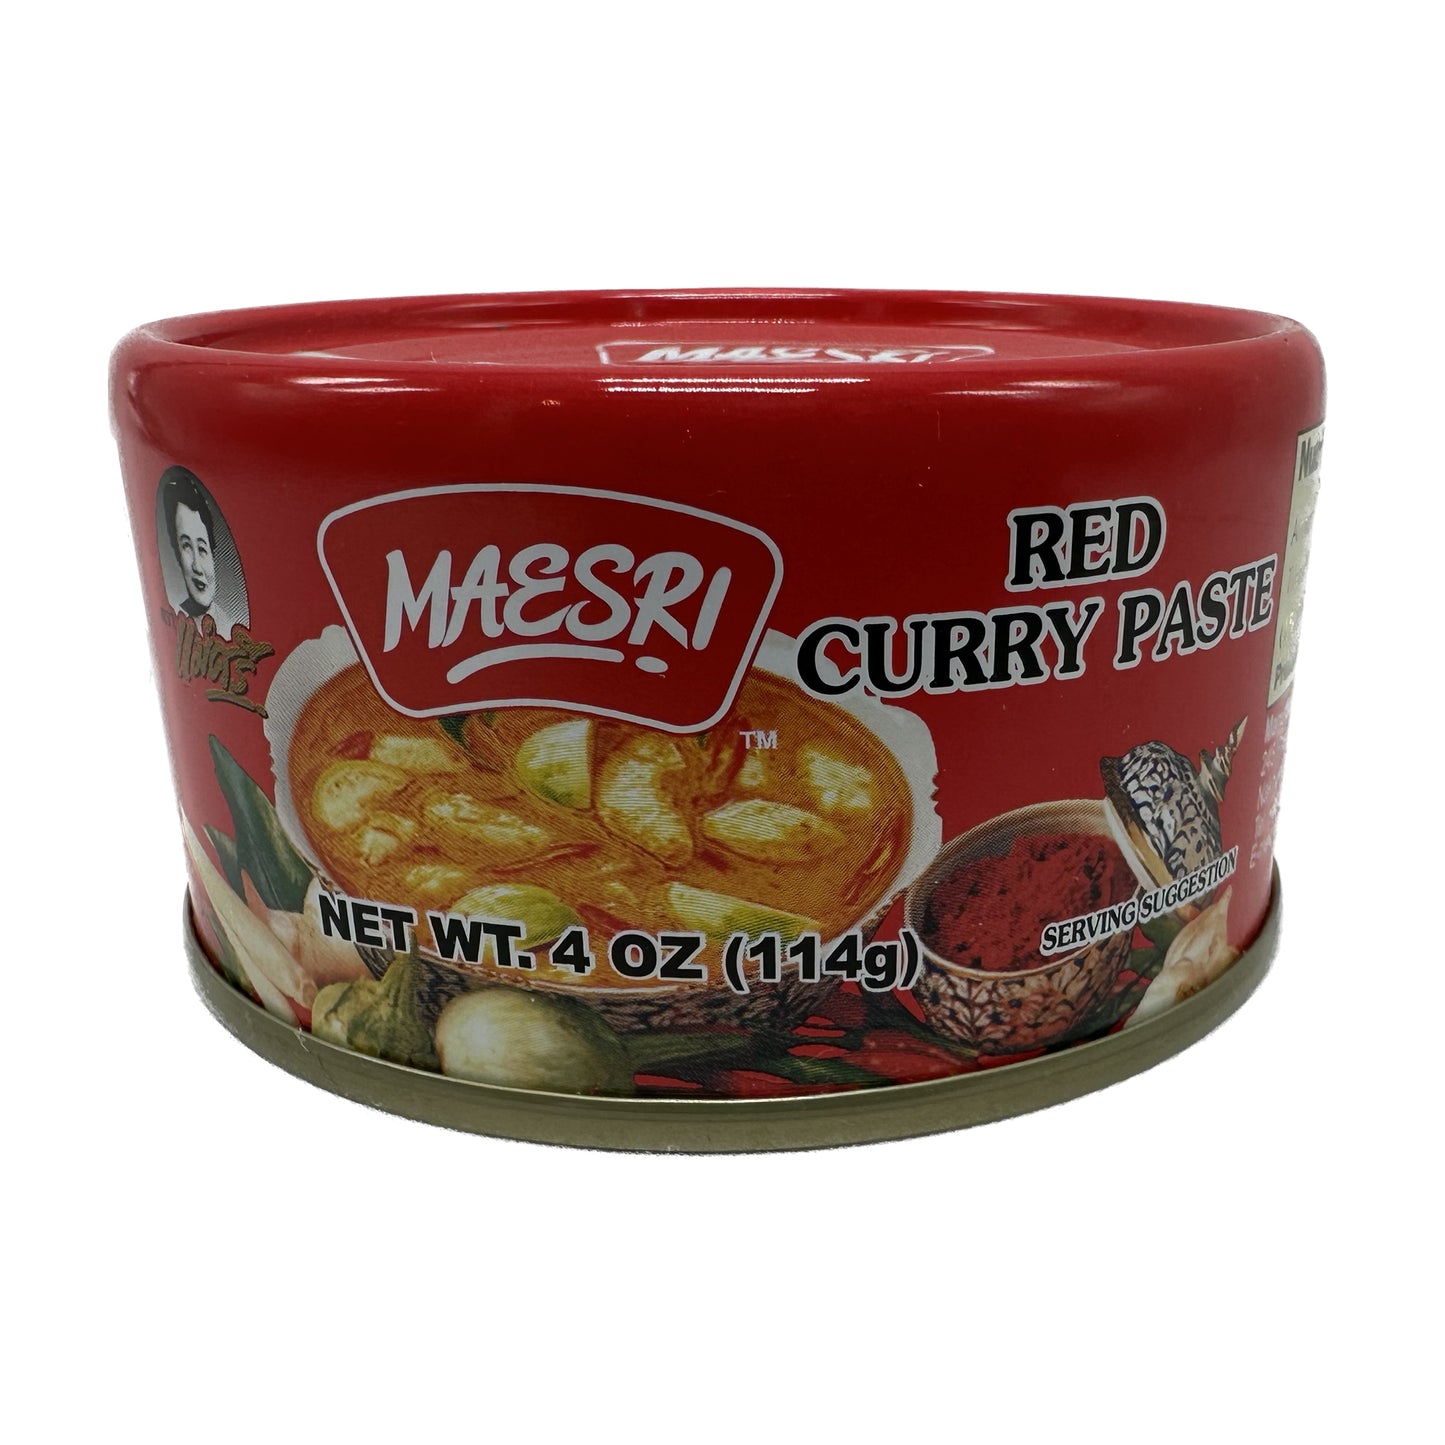 Maesri Red Curry Paste น้ำพริกแกงแดงตราแม่ศรี - 4 oz